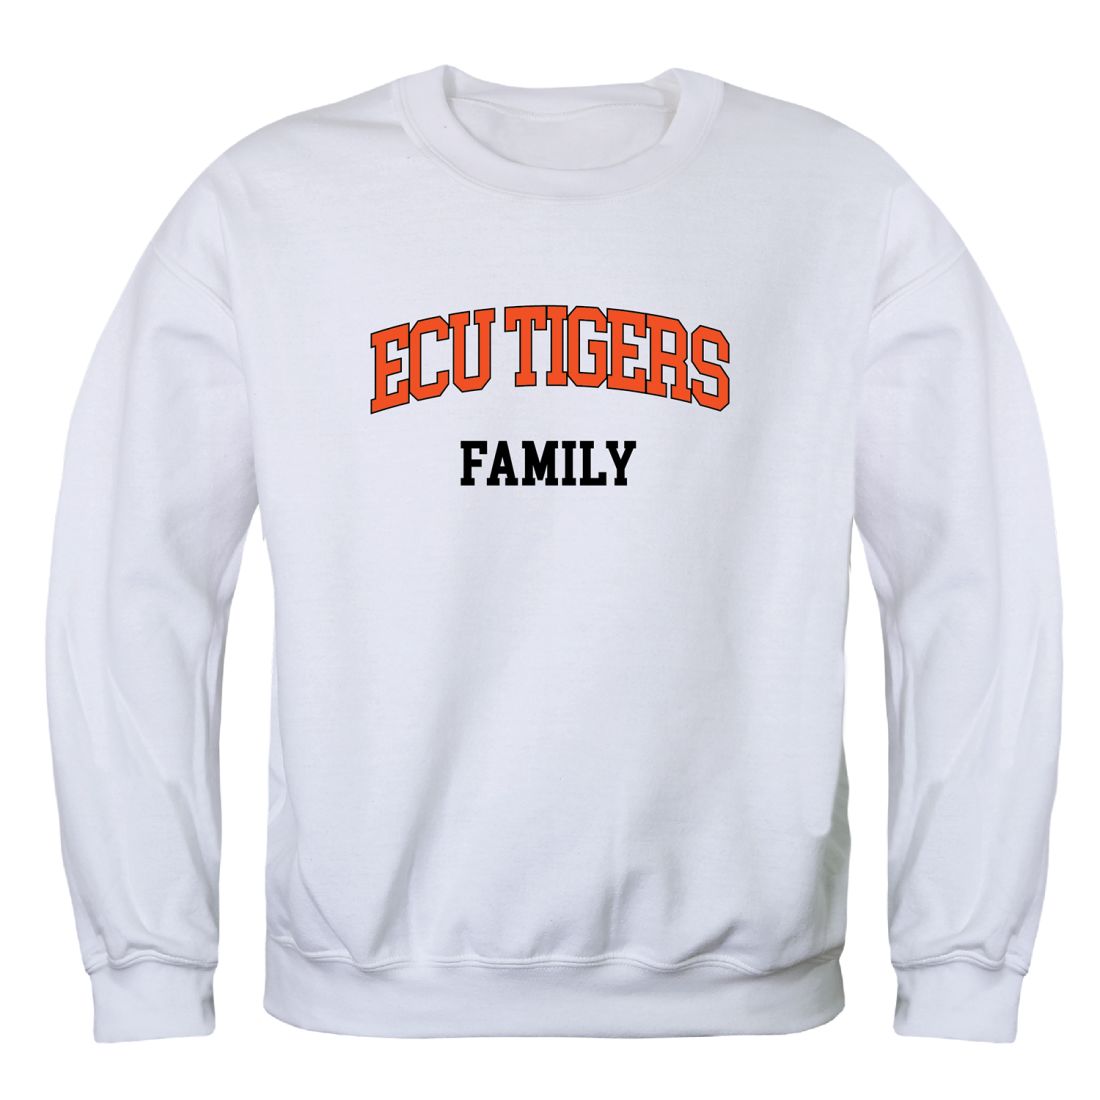 East-Central-University-Tigers-Family-Fleece-Crewneck-Pullover-Sweatshirt